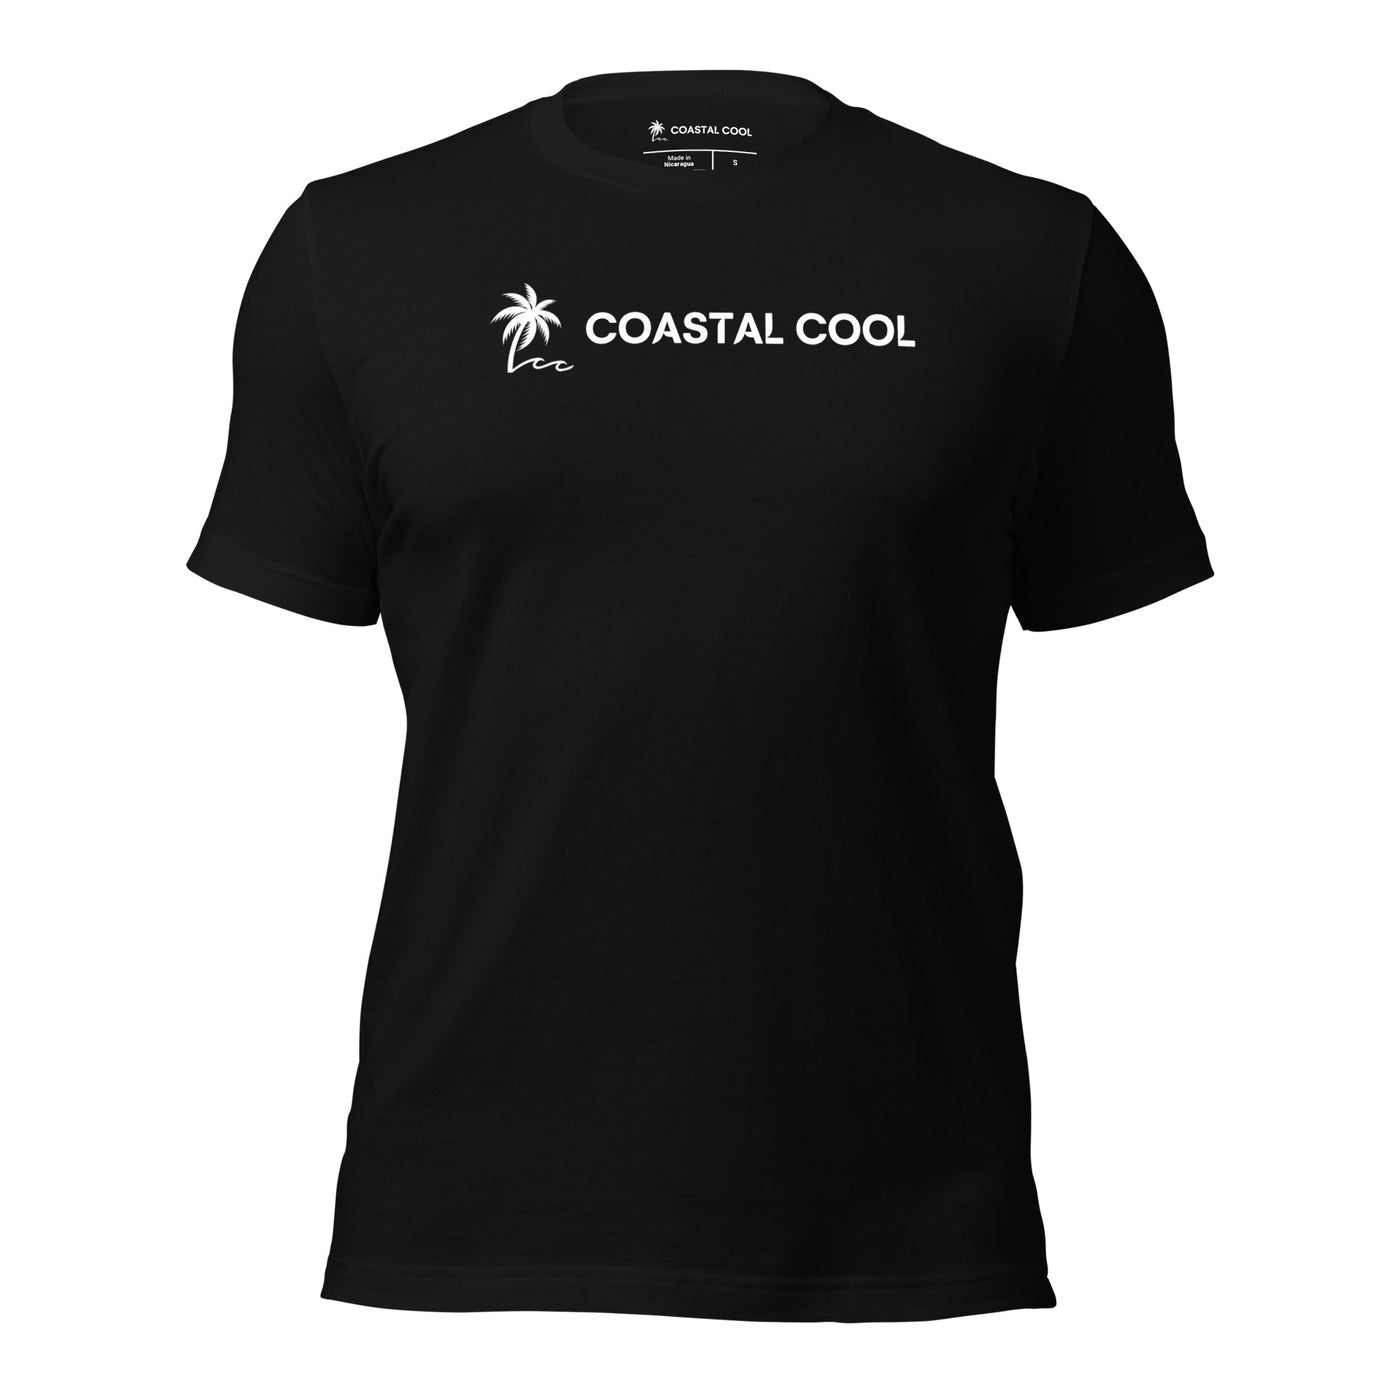 Essentials Tee - Coastal Cool - Swimwear and Beachwear - Recycled fabrics